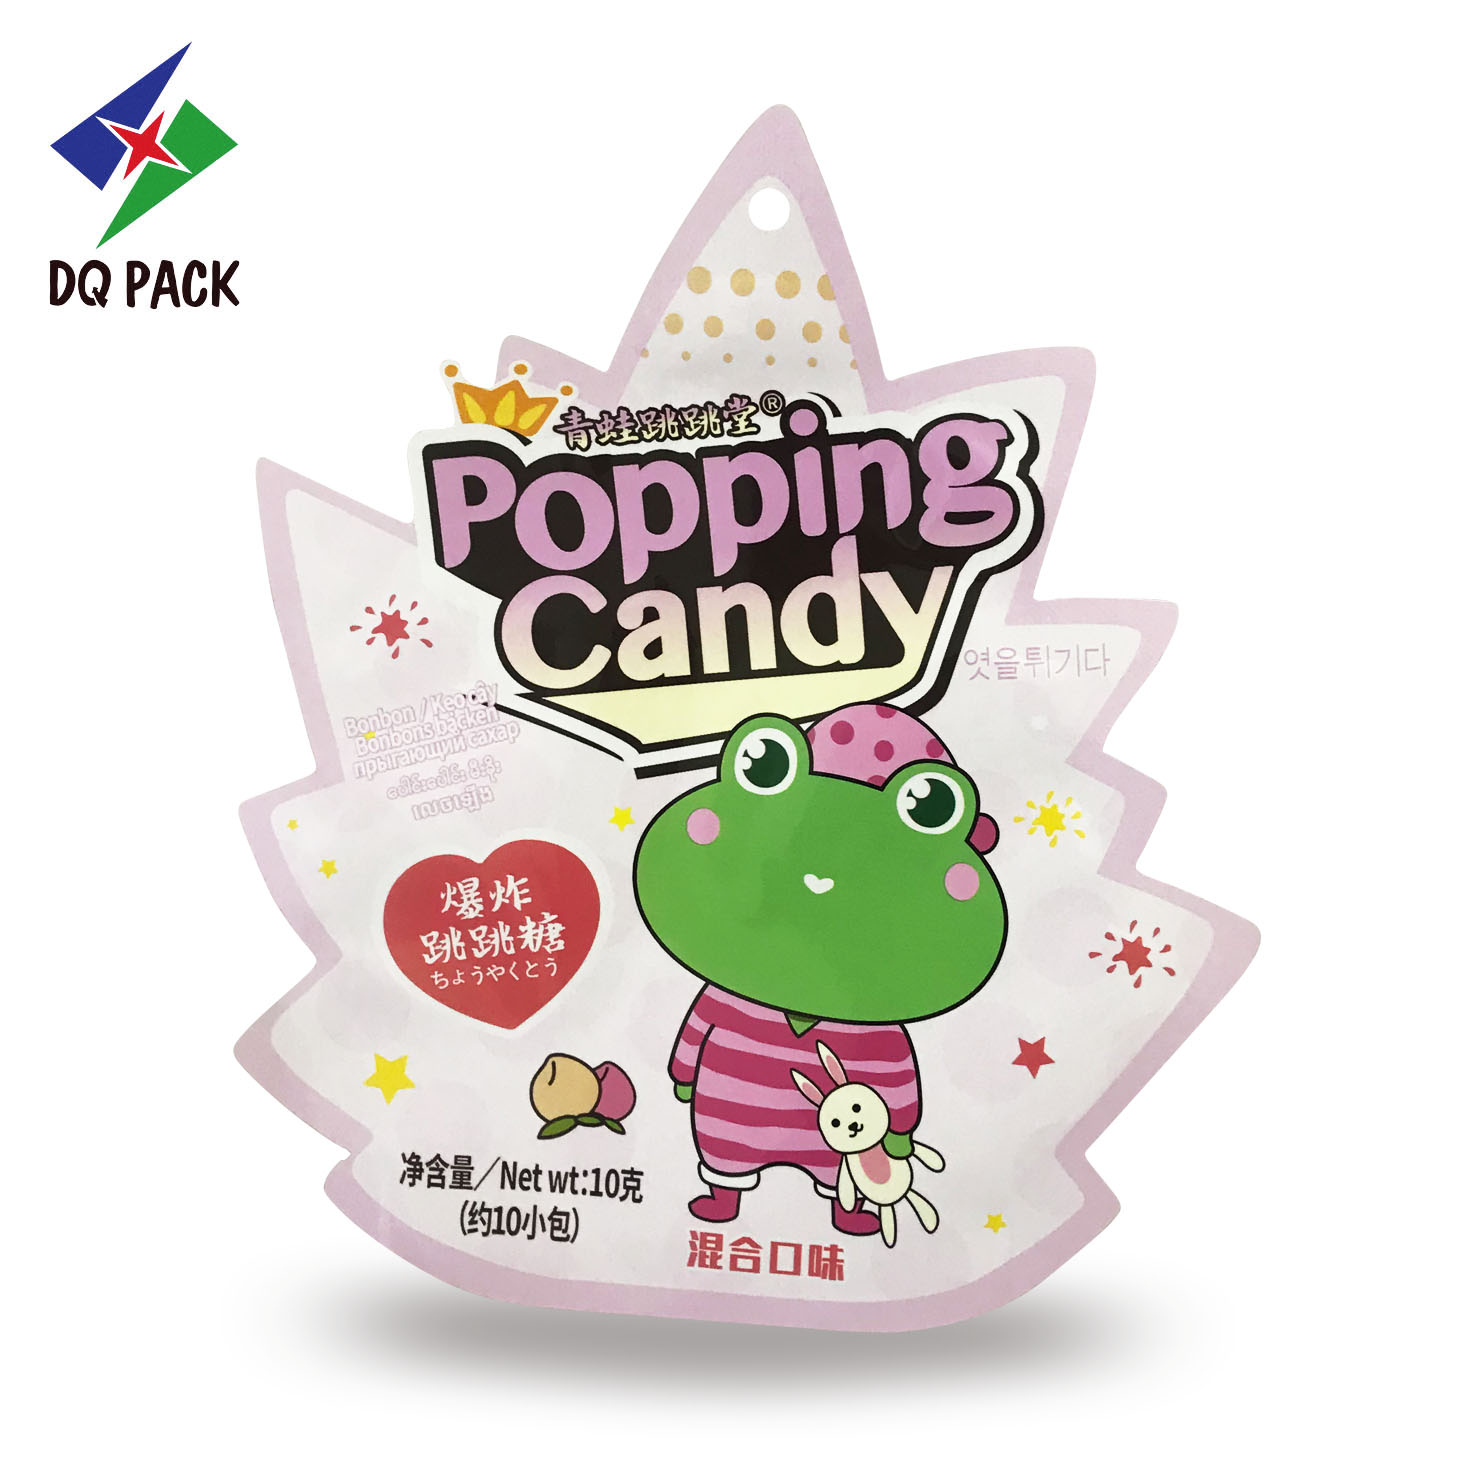 DQ PACK Custom Printed Cartoon Shape Plastic Packaging Bag For Food Snack